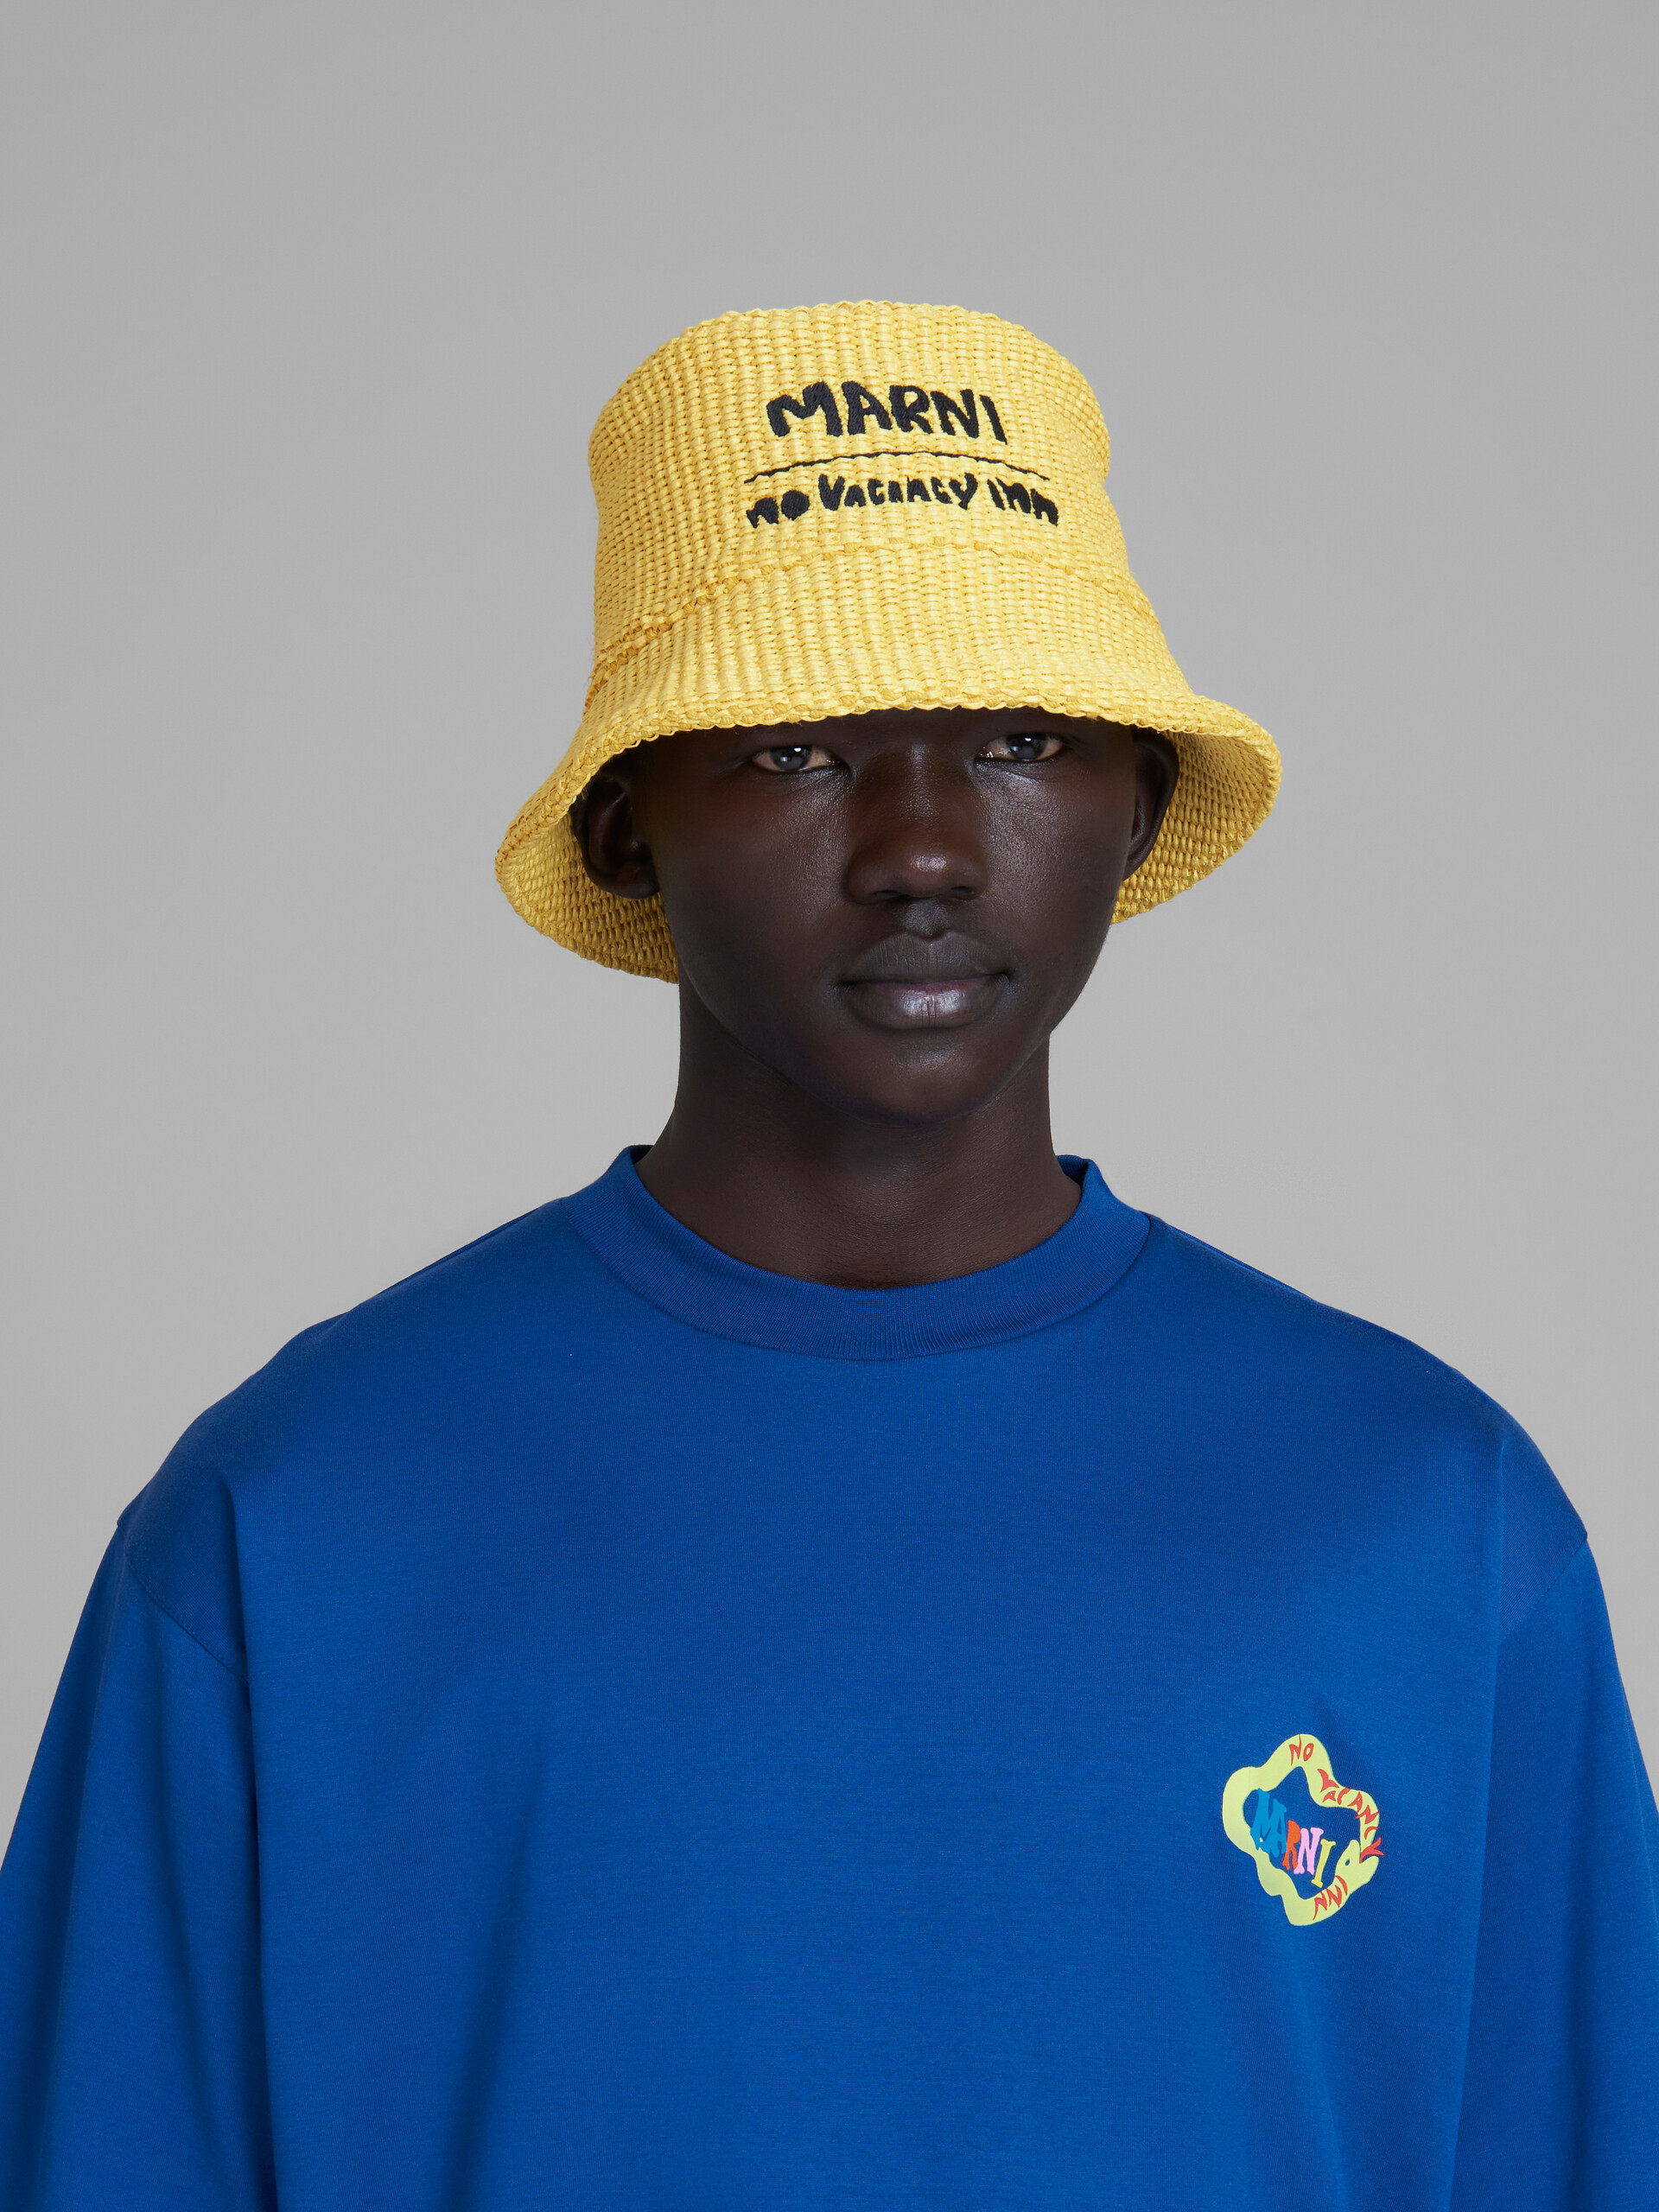 Marni x No Vacancy Inn - Yellow hat in raffia fabric - Hats - Image 2